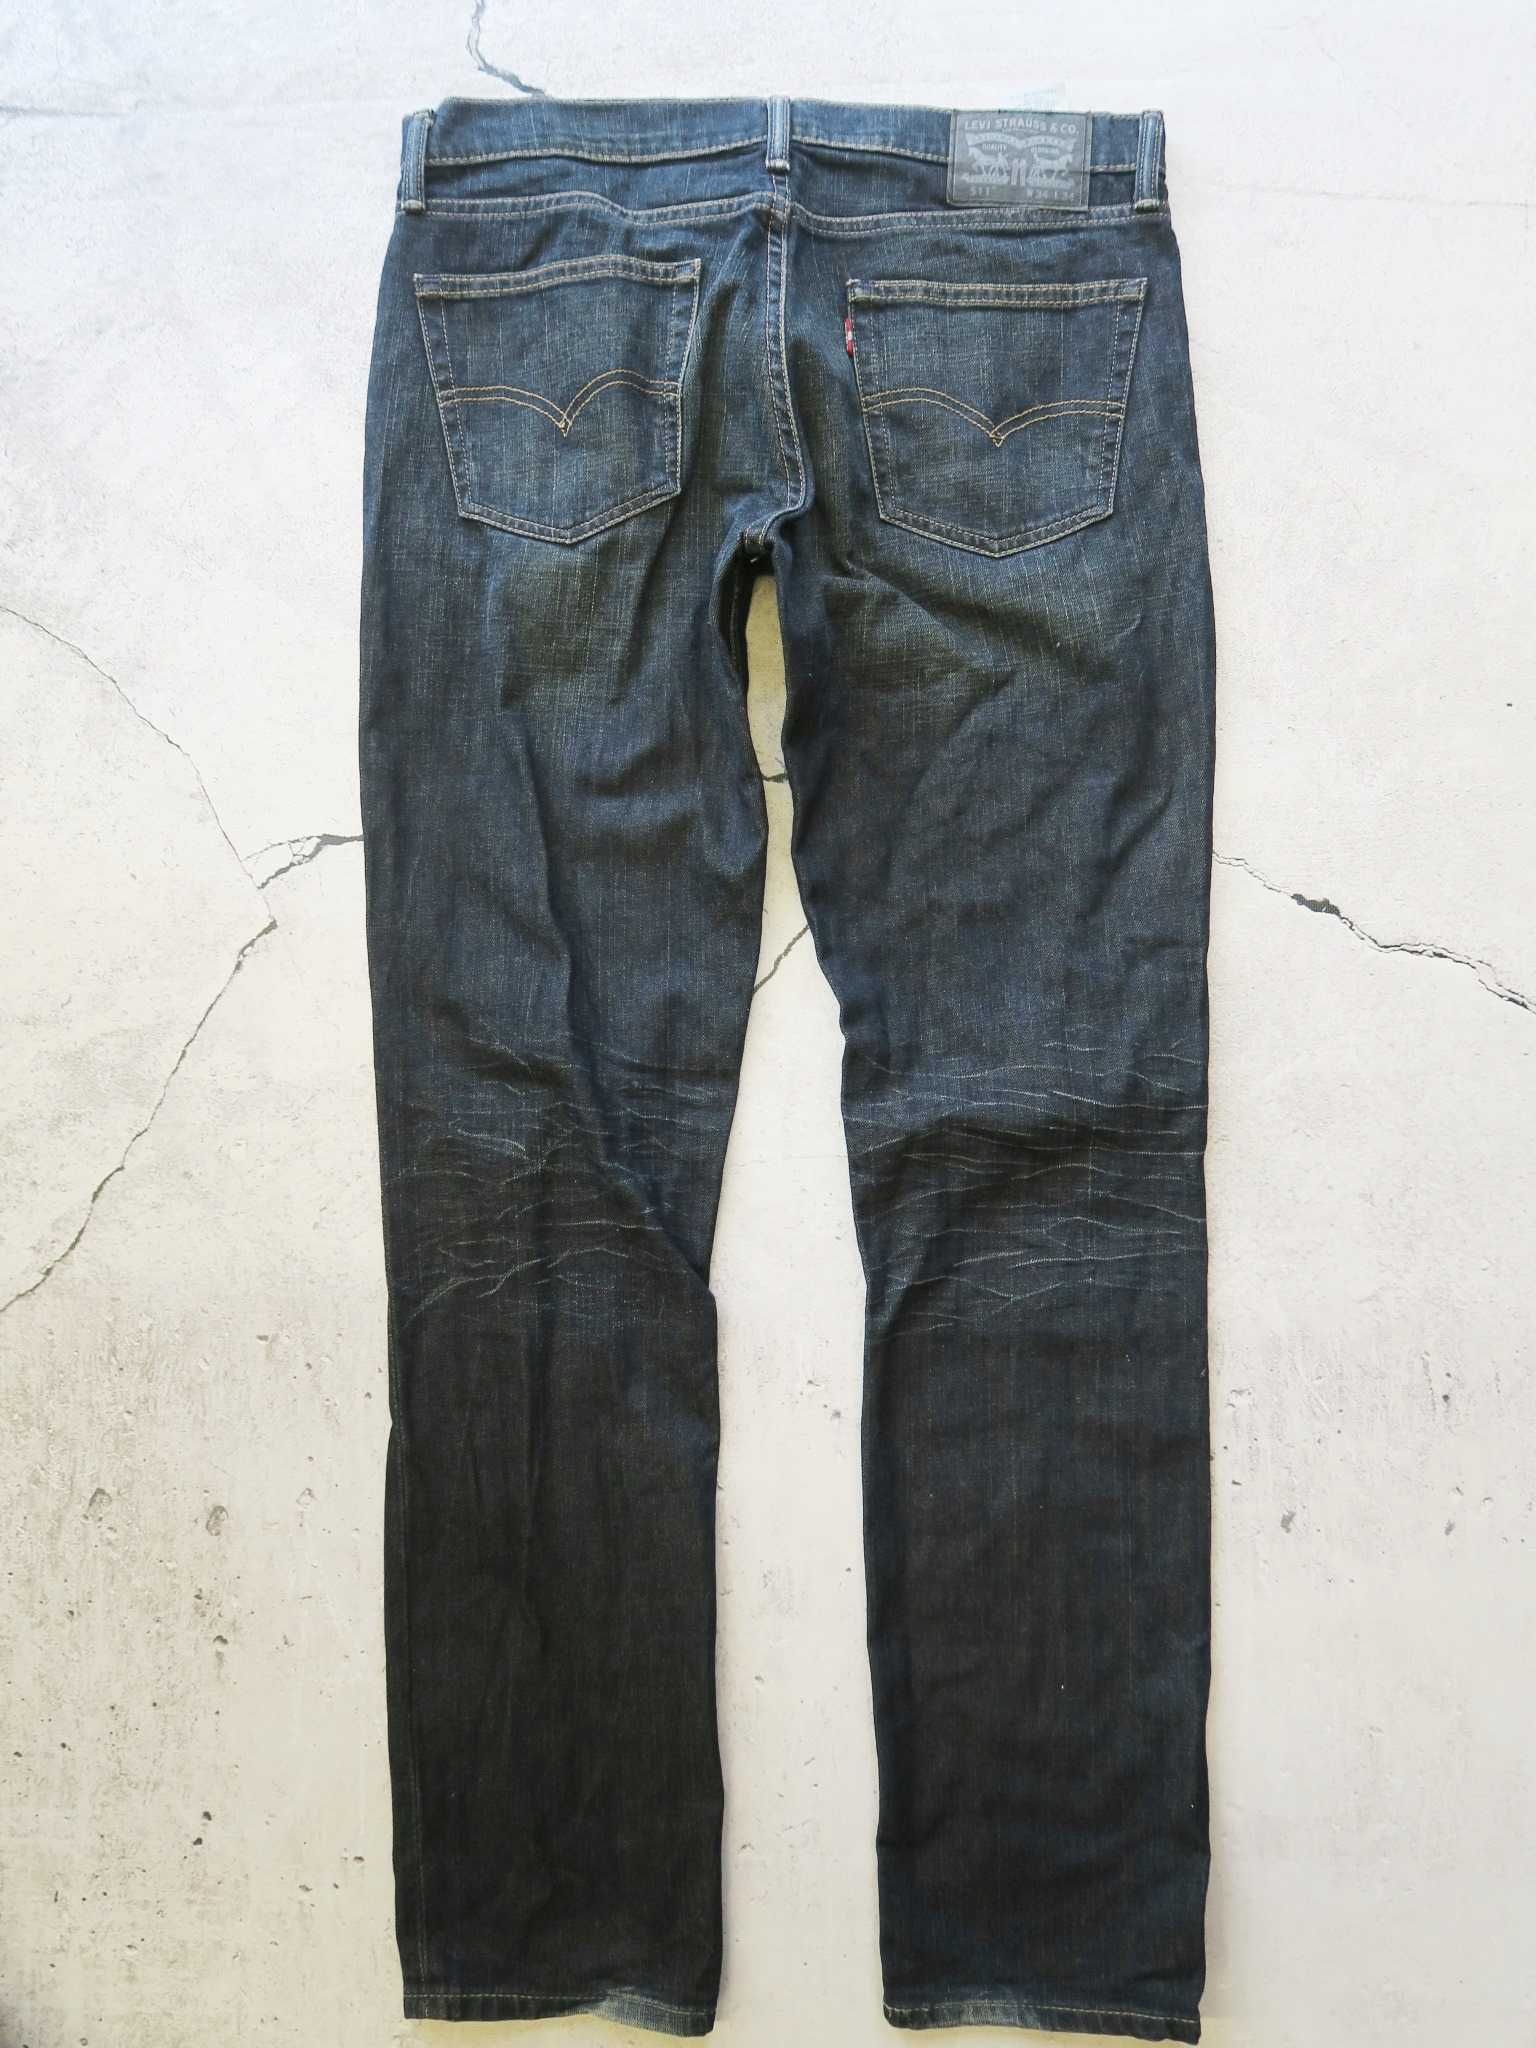 Levi's 511 spodnie jeansy proste 34/34